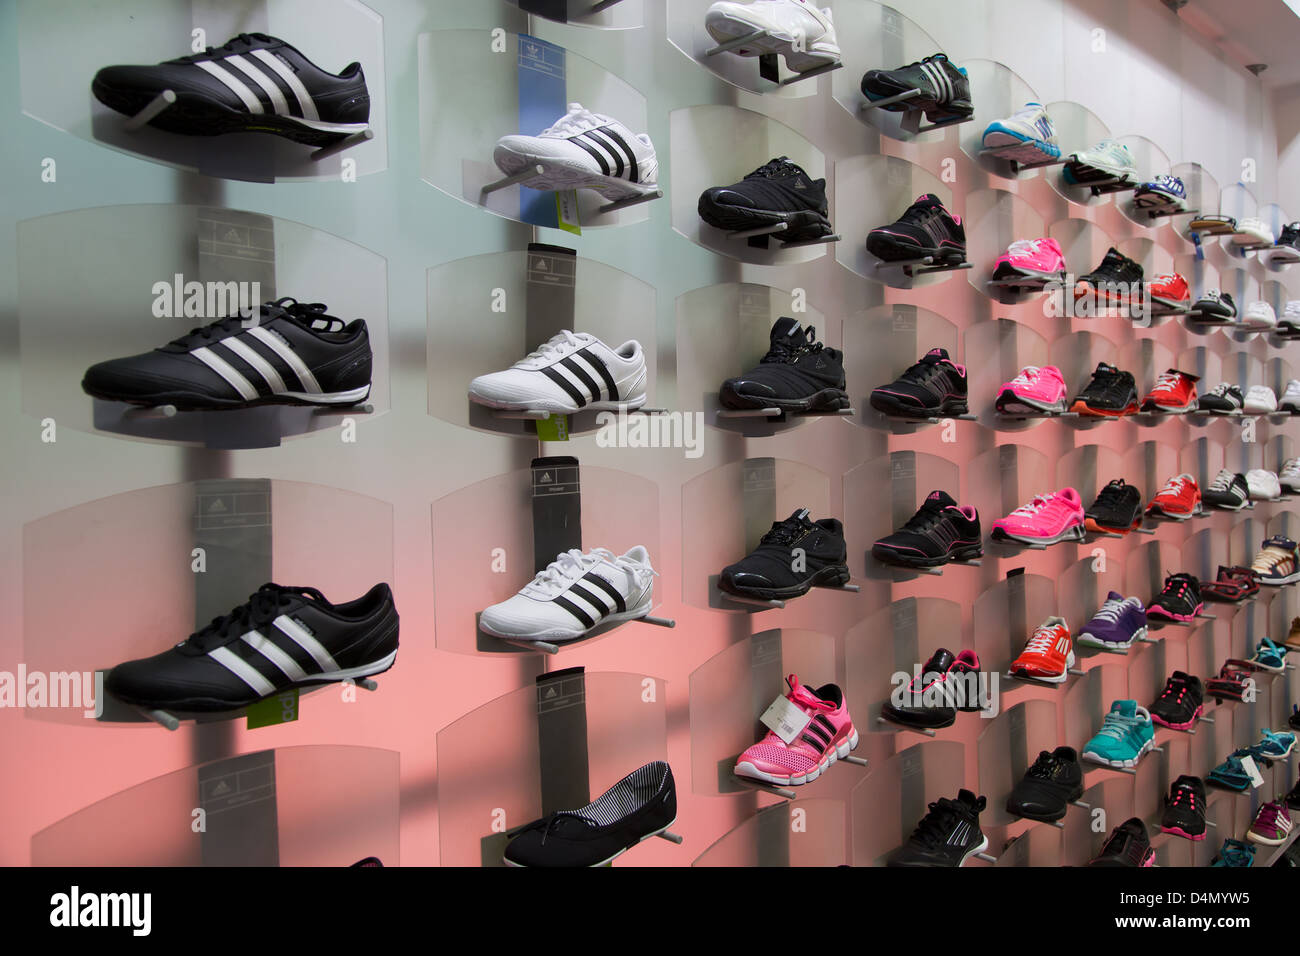 Adidas shoes display -Fotos und -Bildmaterial in hoher Auflösung – Alamy